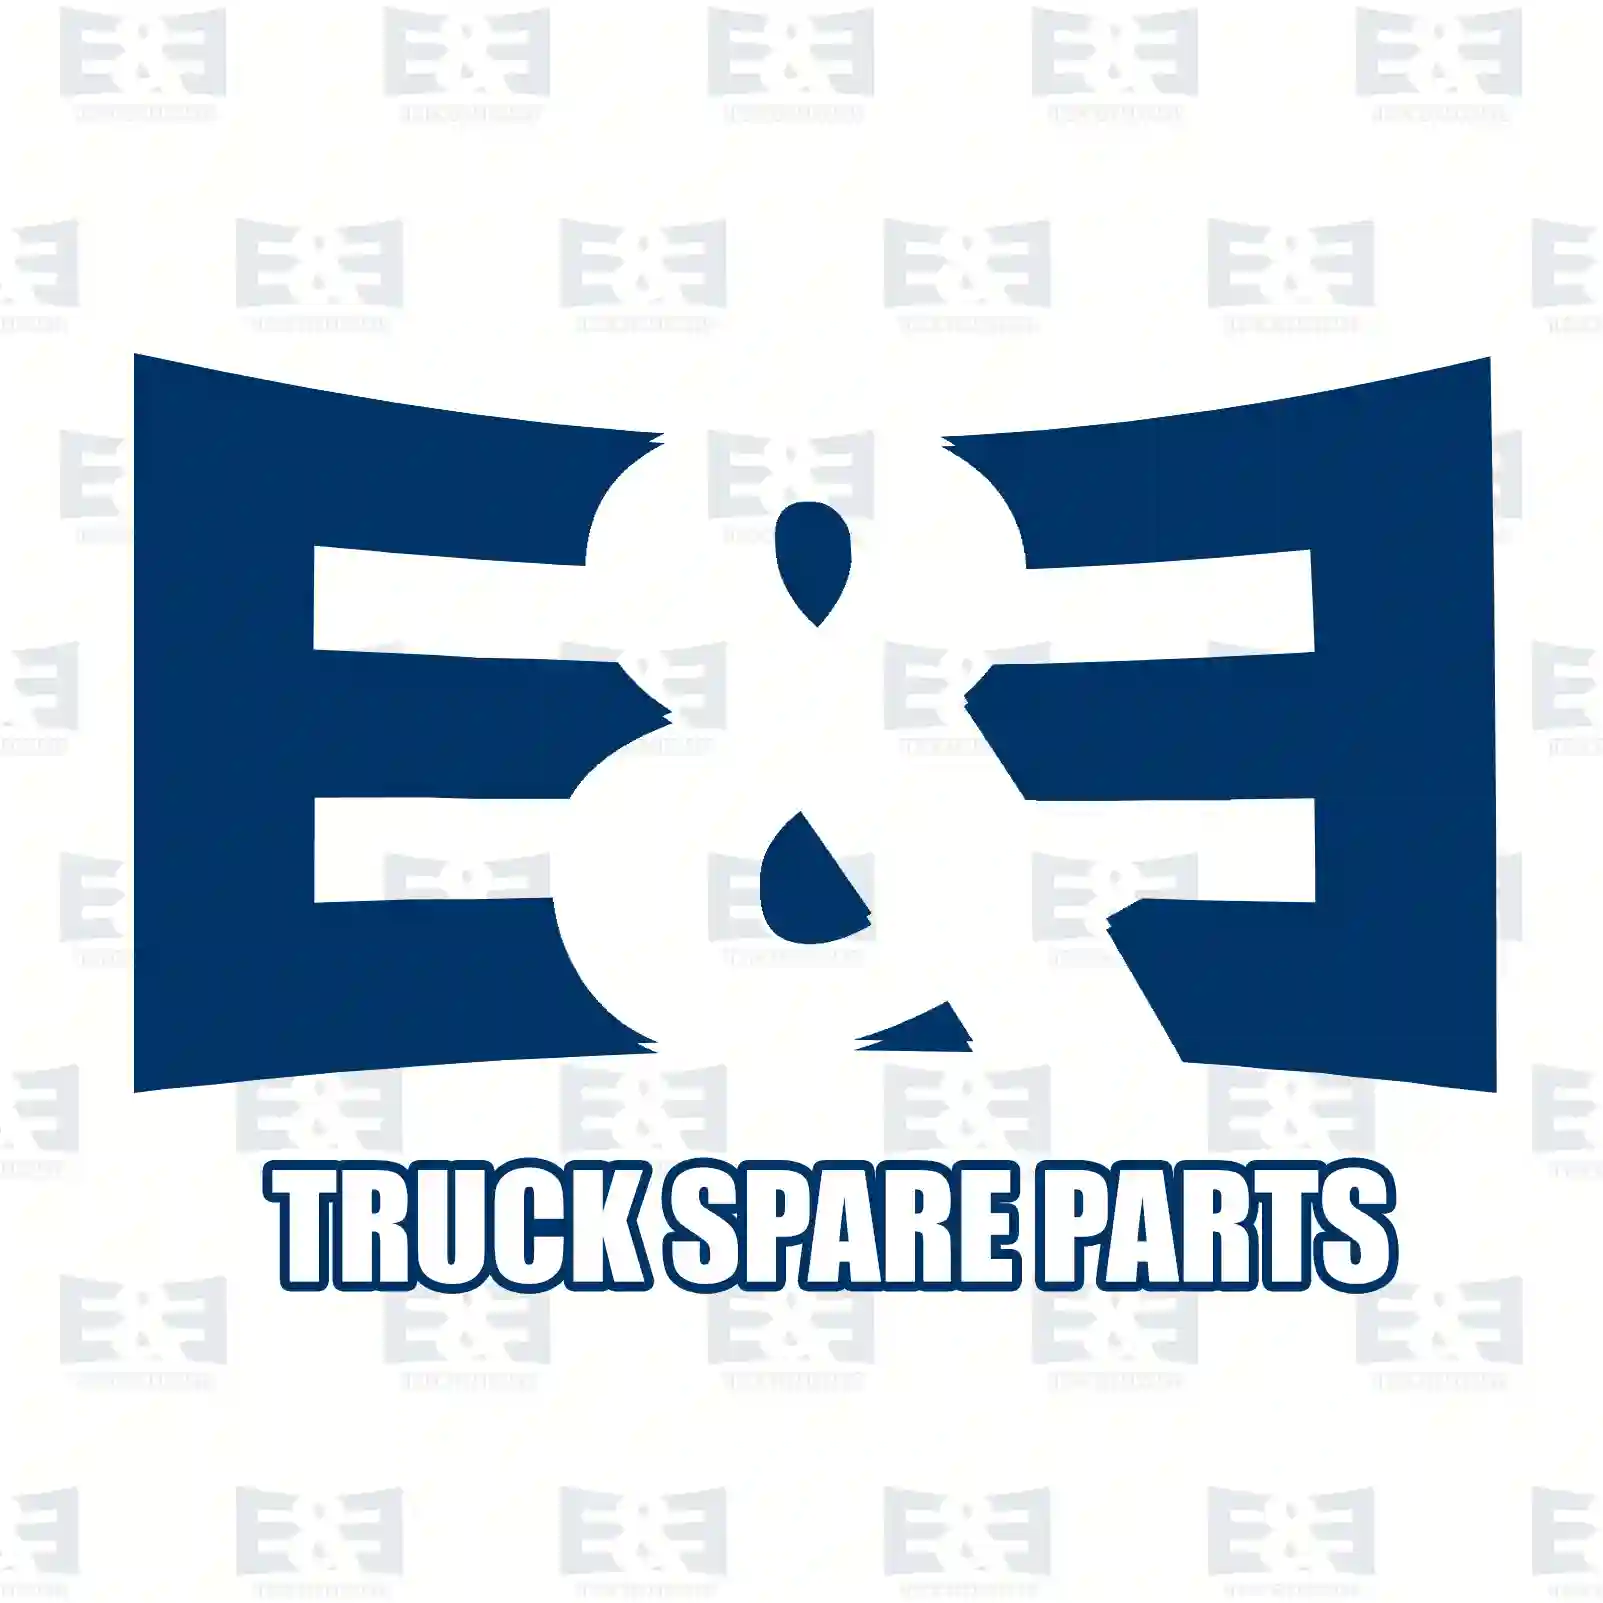 Spring brake cylinder, 2E2295608, 0204206618, 0214206618, , , ||  2E2295608 E&E Truck Spare Parts | Truck Spare Parts, Auotomotive Spare Parts Spring brake cylinder, 2E2295608, 0204206618, 0214206618, , , ||  2E2295608 E&E Truck Spare Parts | Truck Spare Parts, Auotomotive Spare Parts